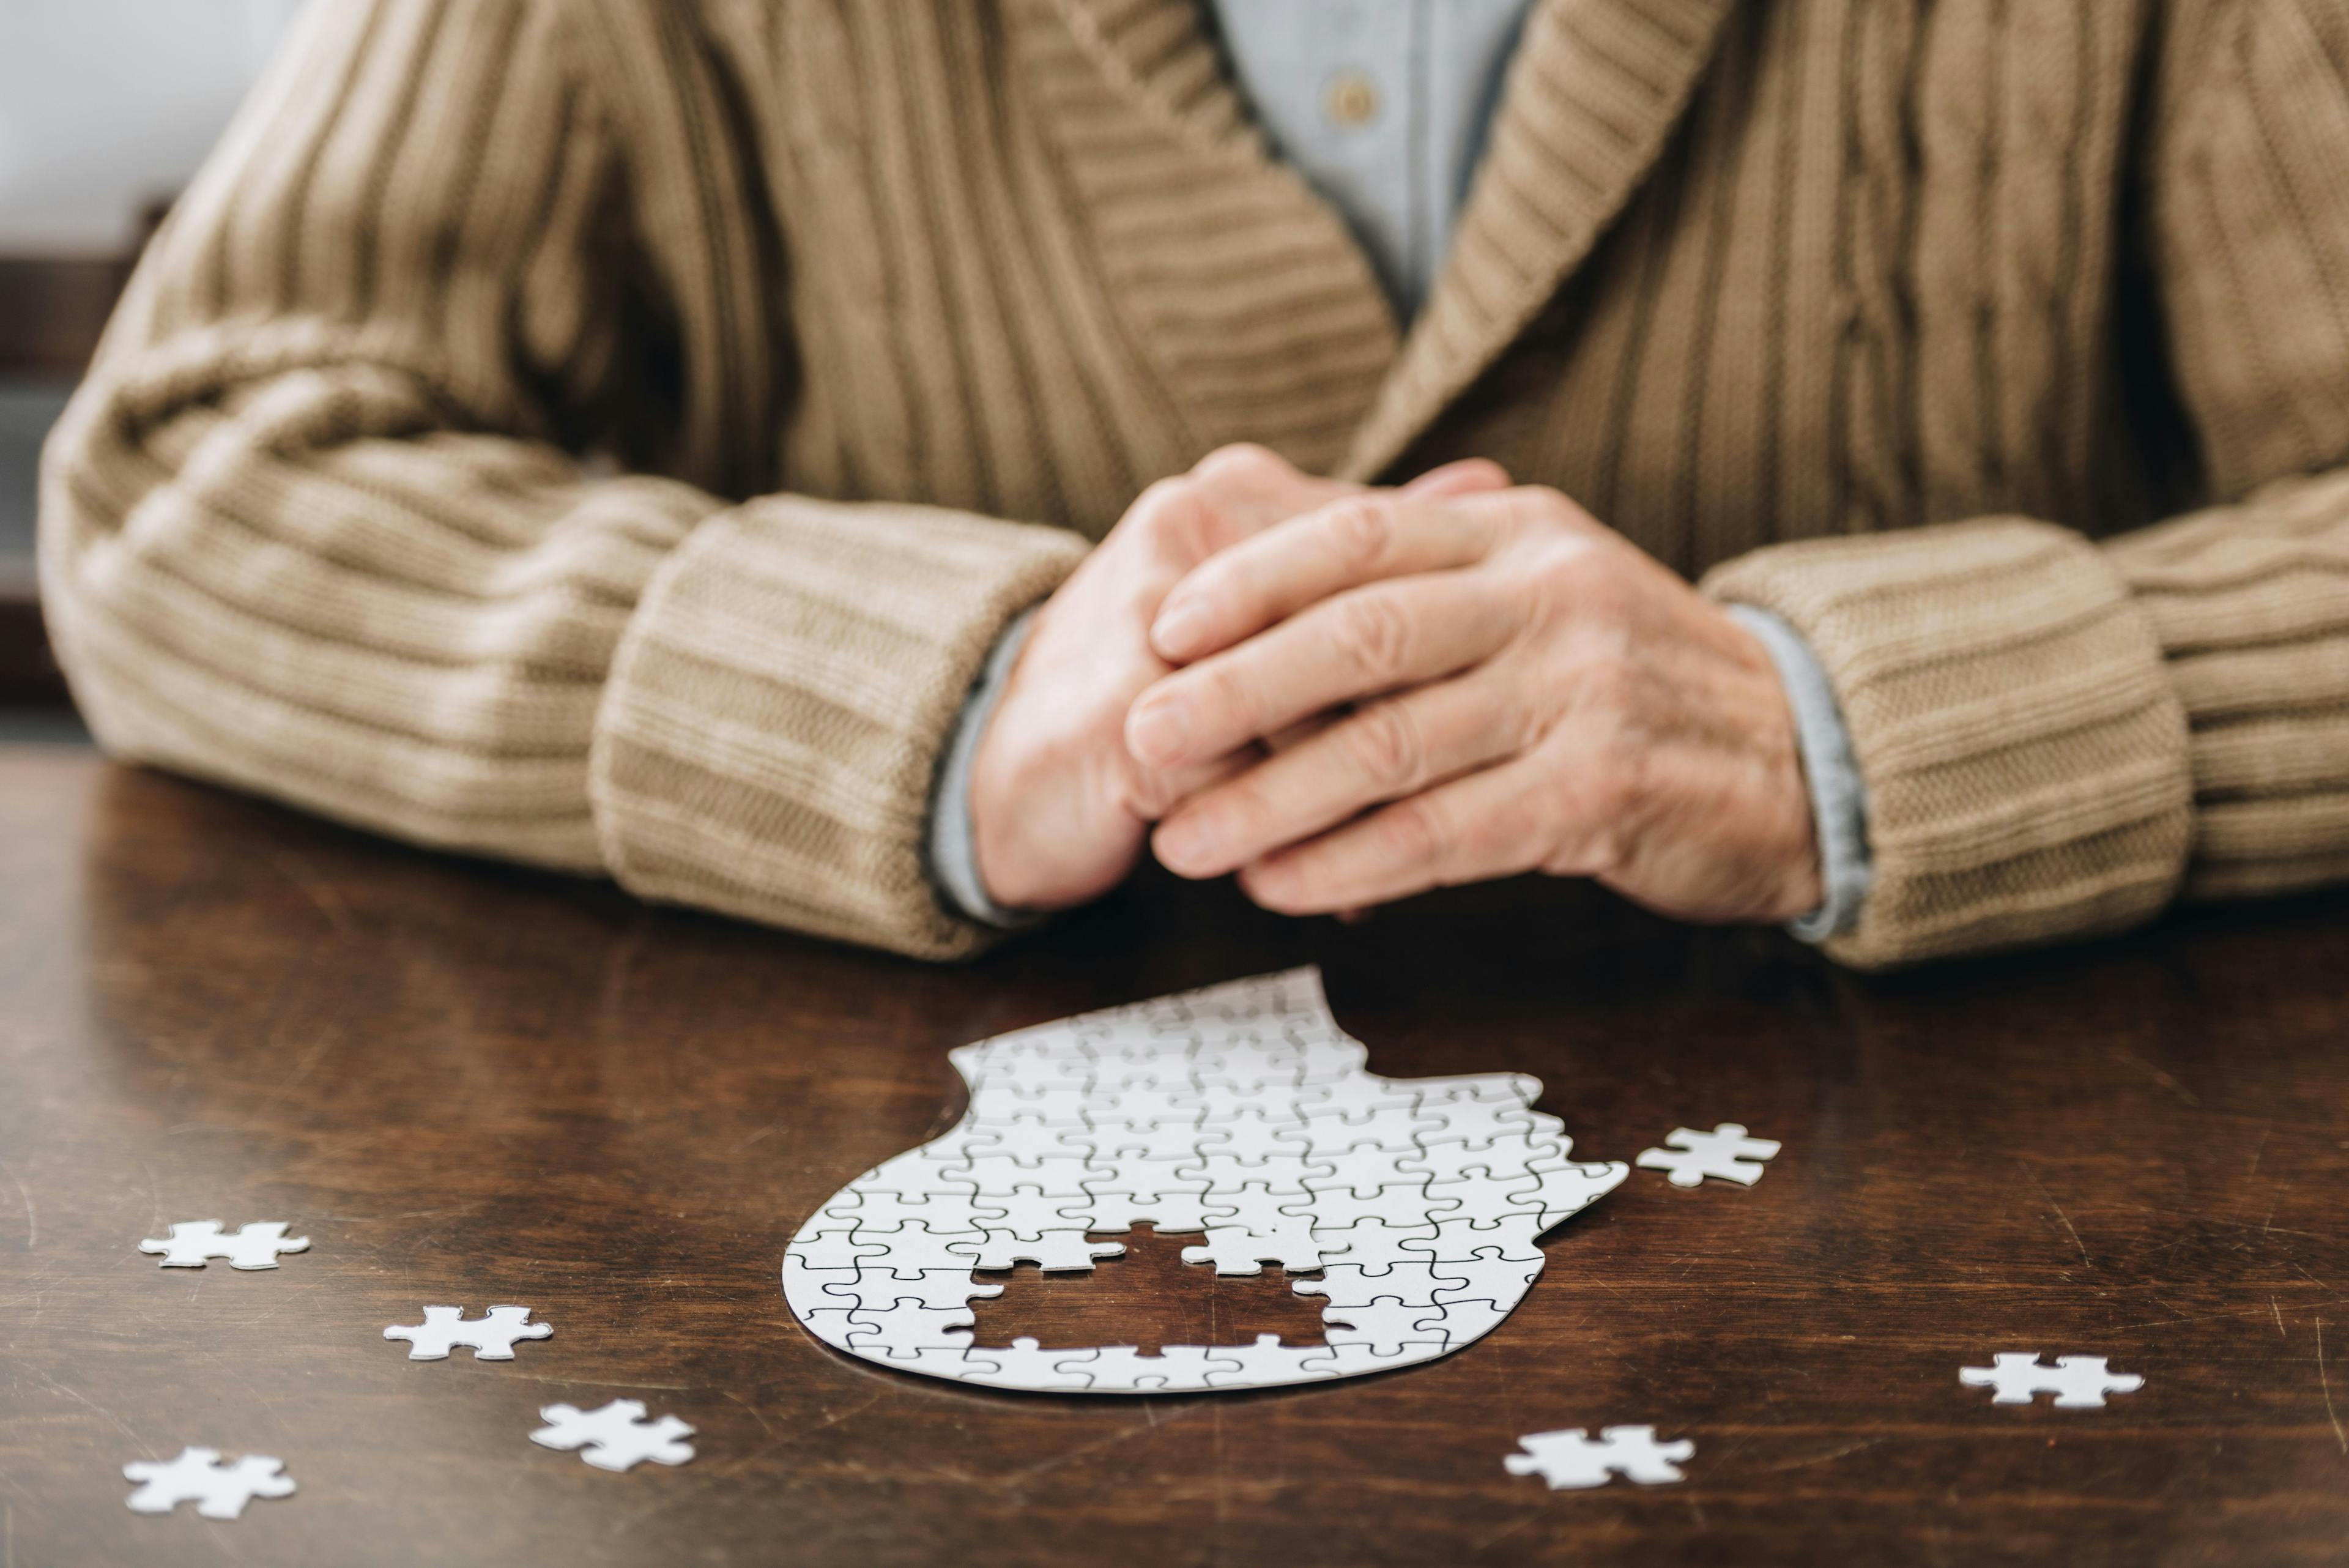 Elderly man putting together a puzzle -- Image credit: LIGHTFIELD STUDIOS | stock.adobe.com